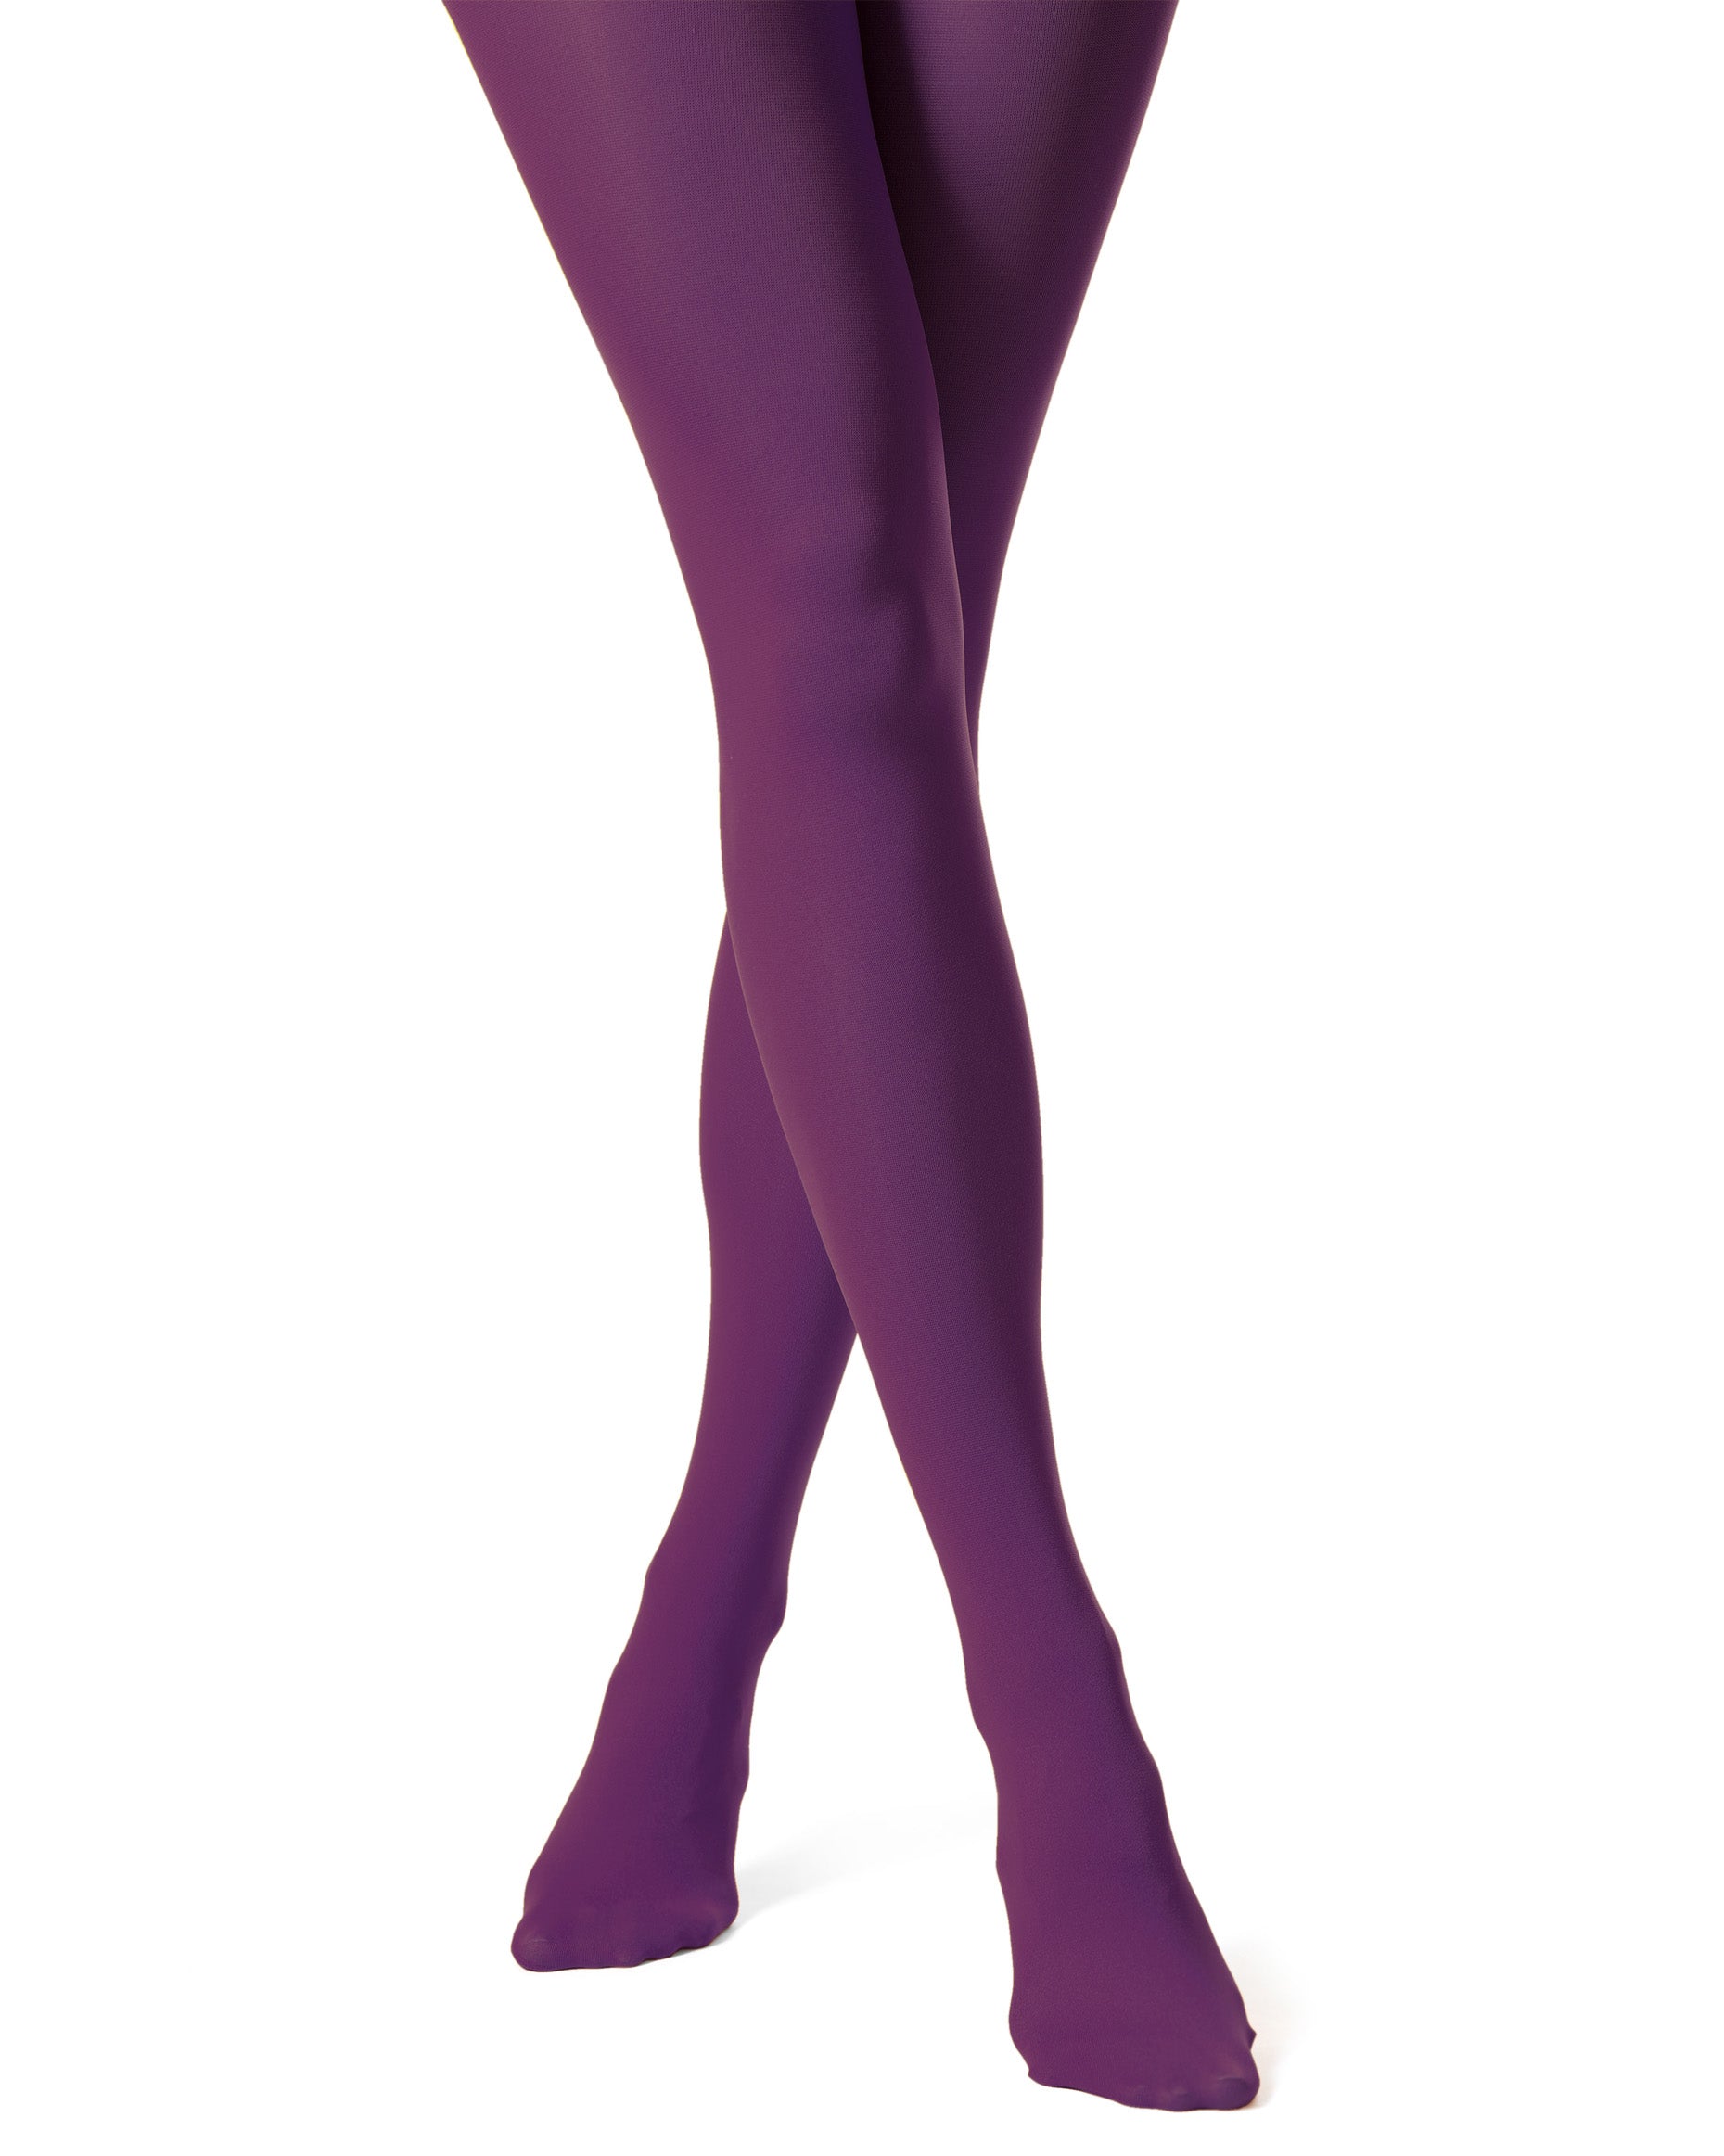 Trasparenze Sophie 70 Collant - coloured opaque tights in dark purple (magenta)